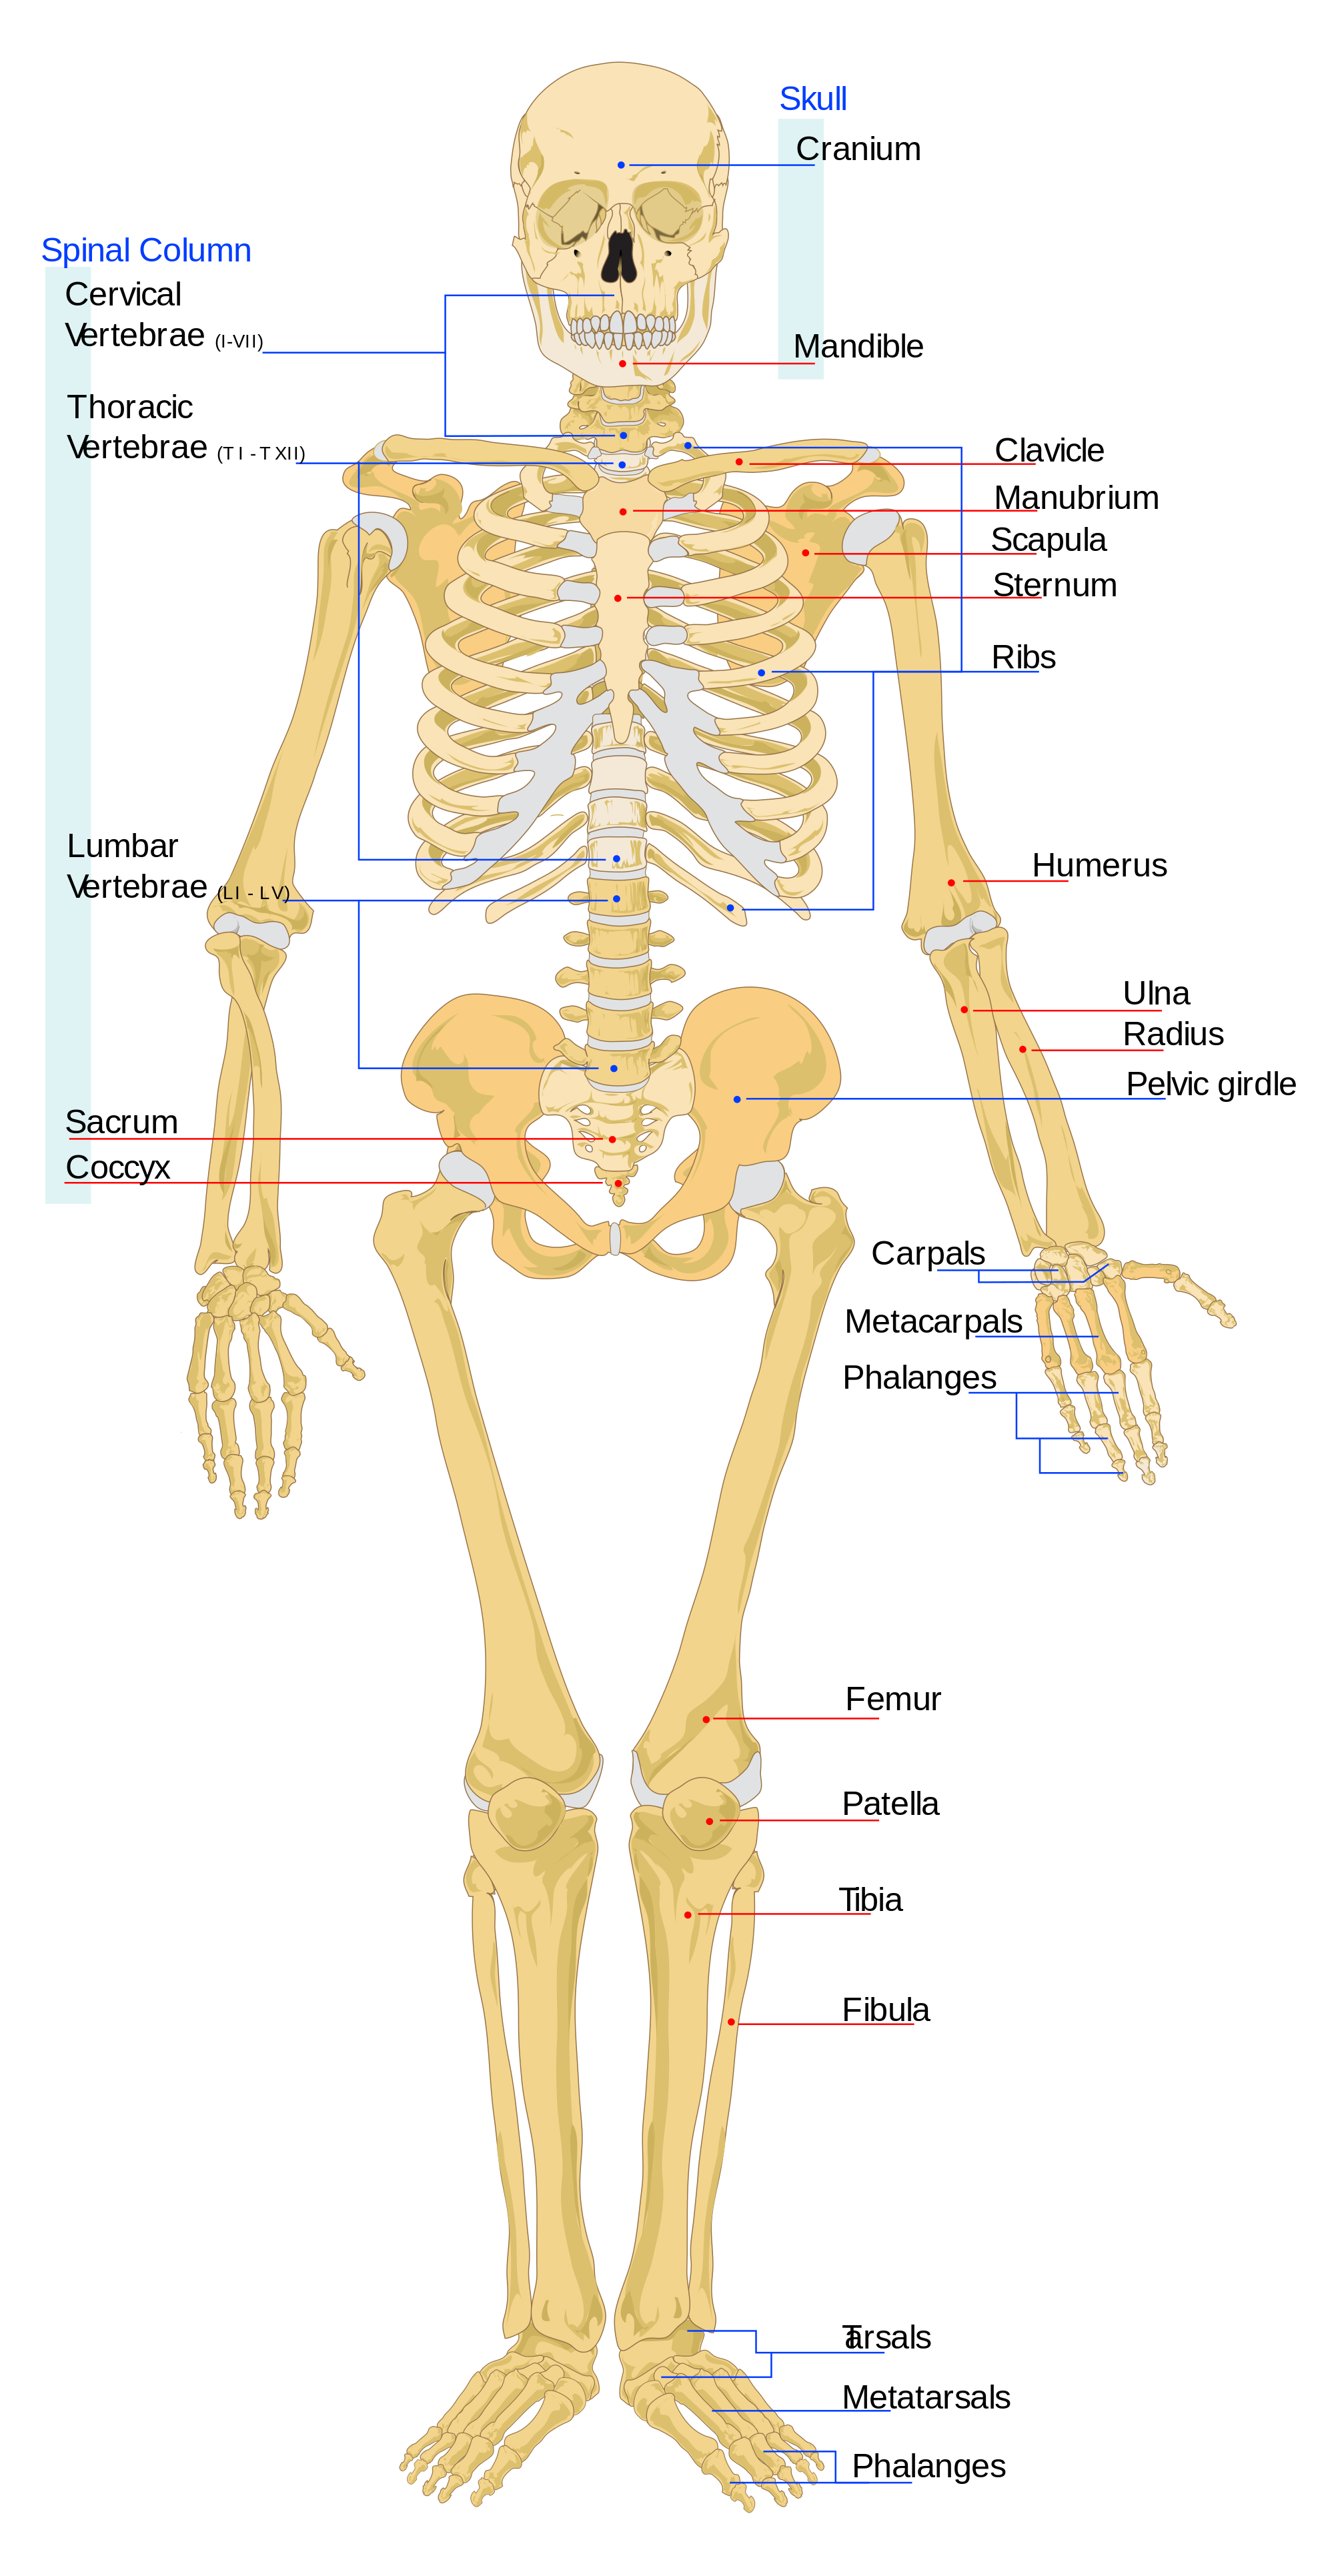 Sketch of human skeleton